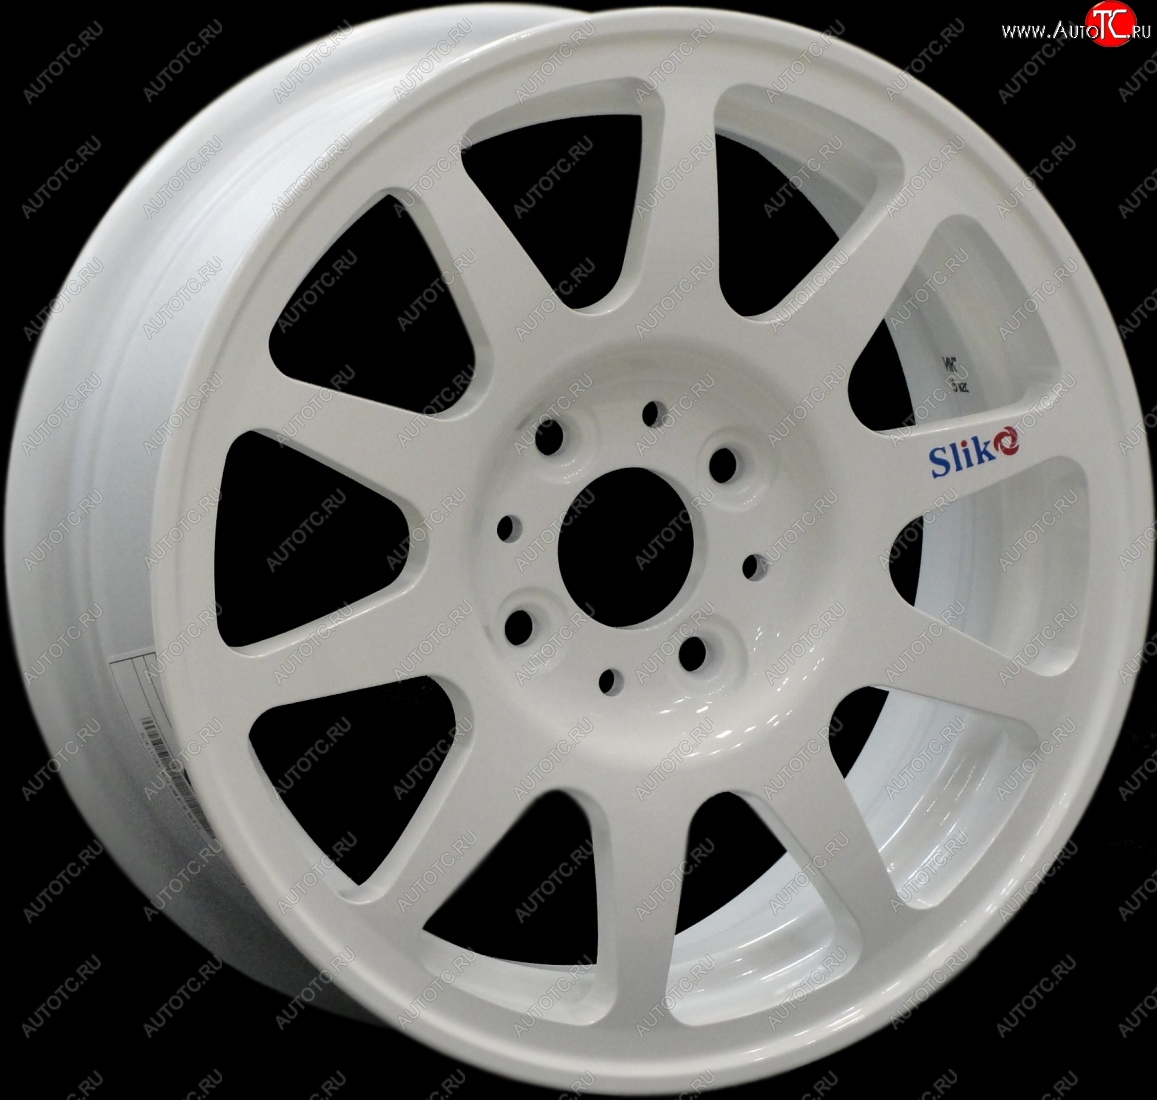 12 499 р. Кованый диск Slik Classik 5.5x14 (Белый W) Nissan Latio N17 седан правый руль дорестайлинг (2012-2014) 4x100.0xDIA60.0xET40.0 (Цвет: Белый W)